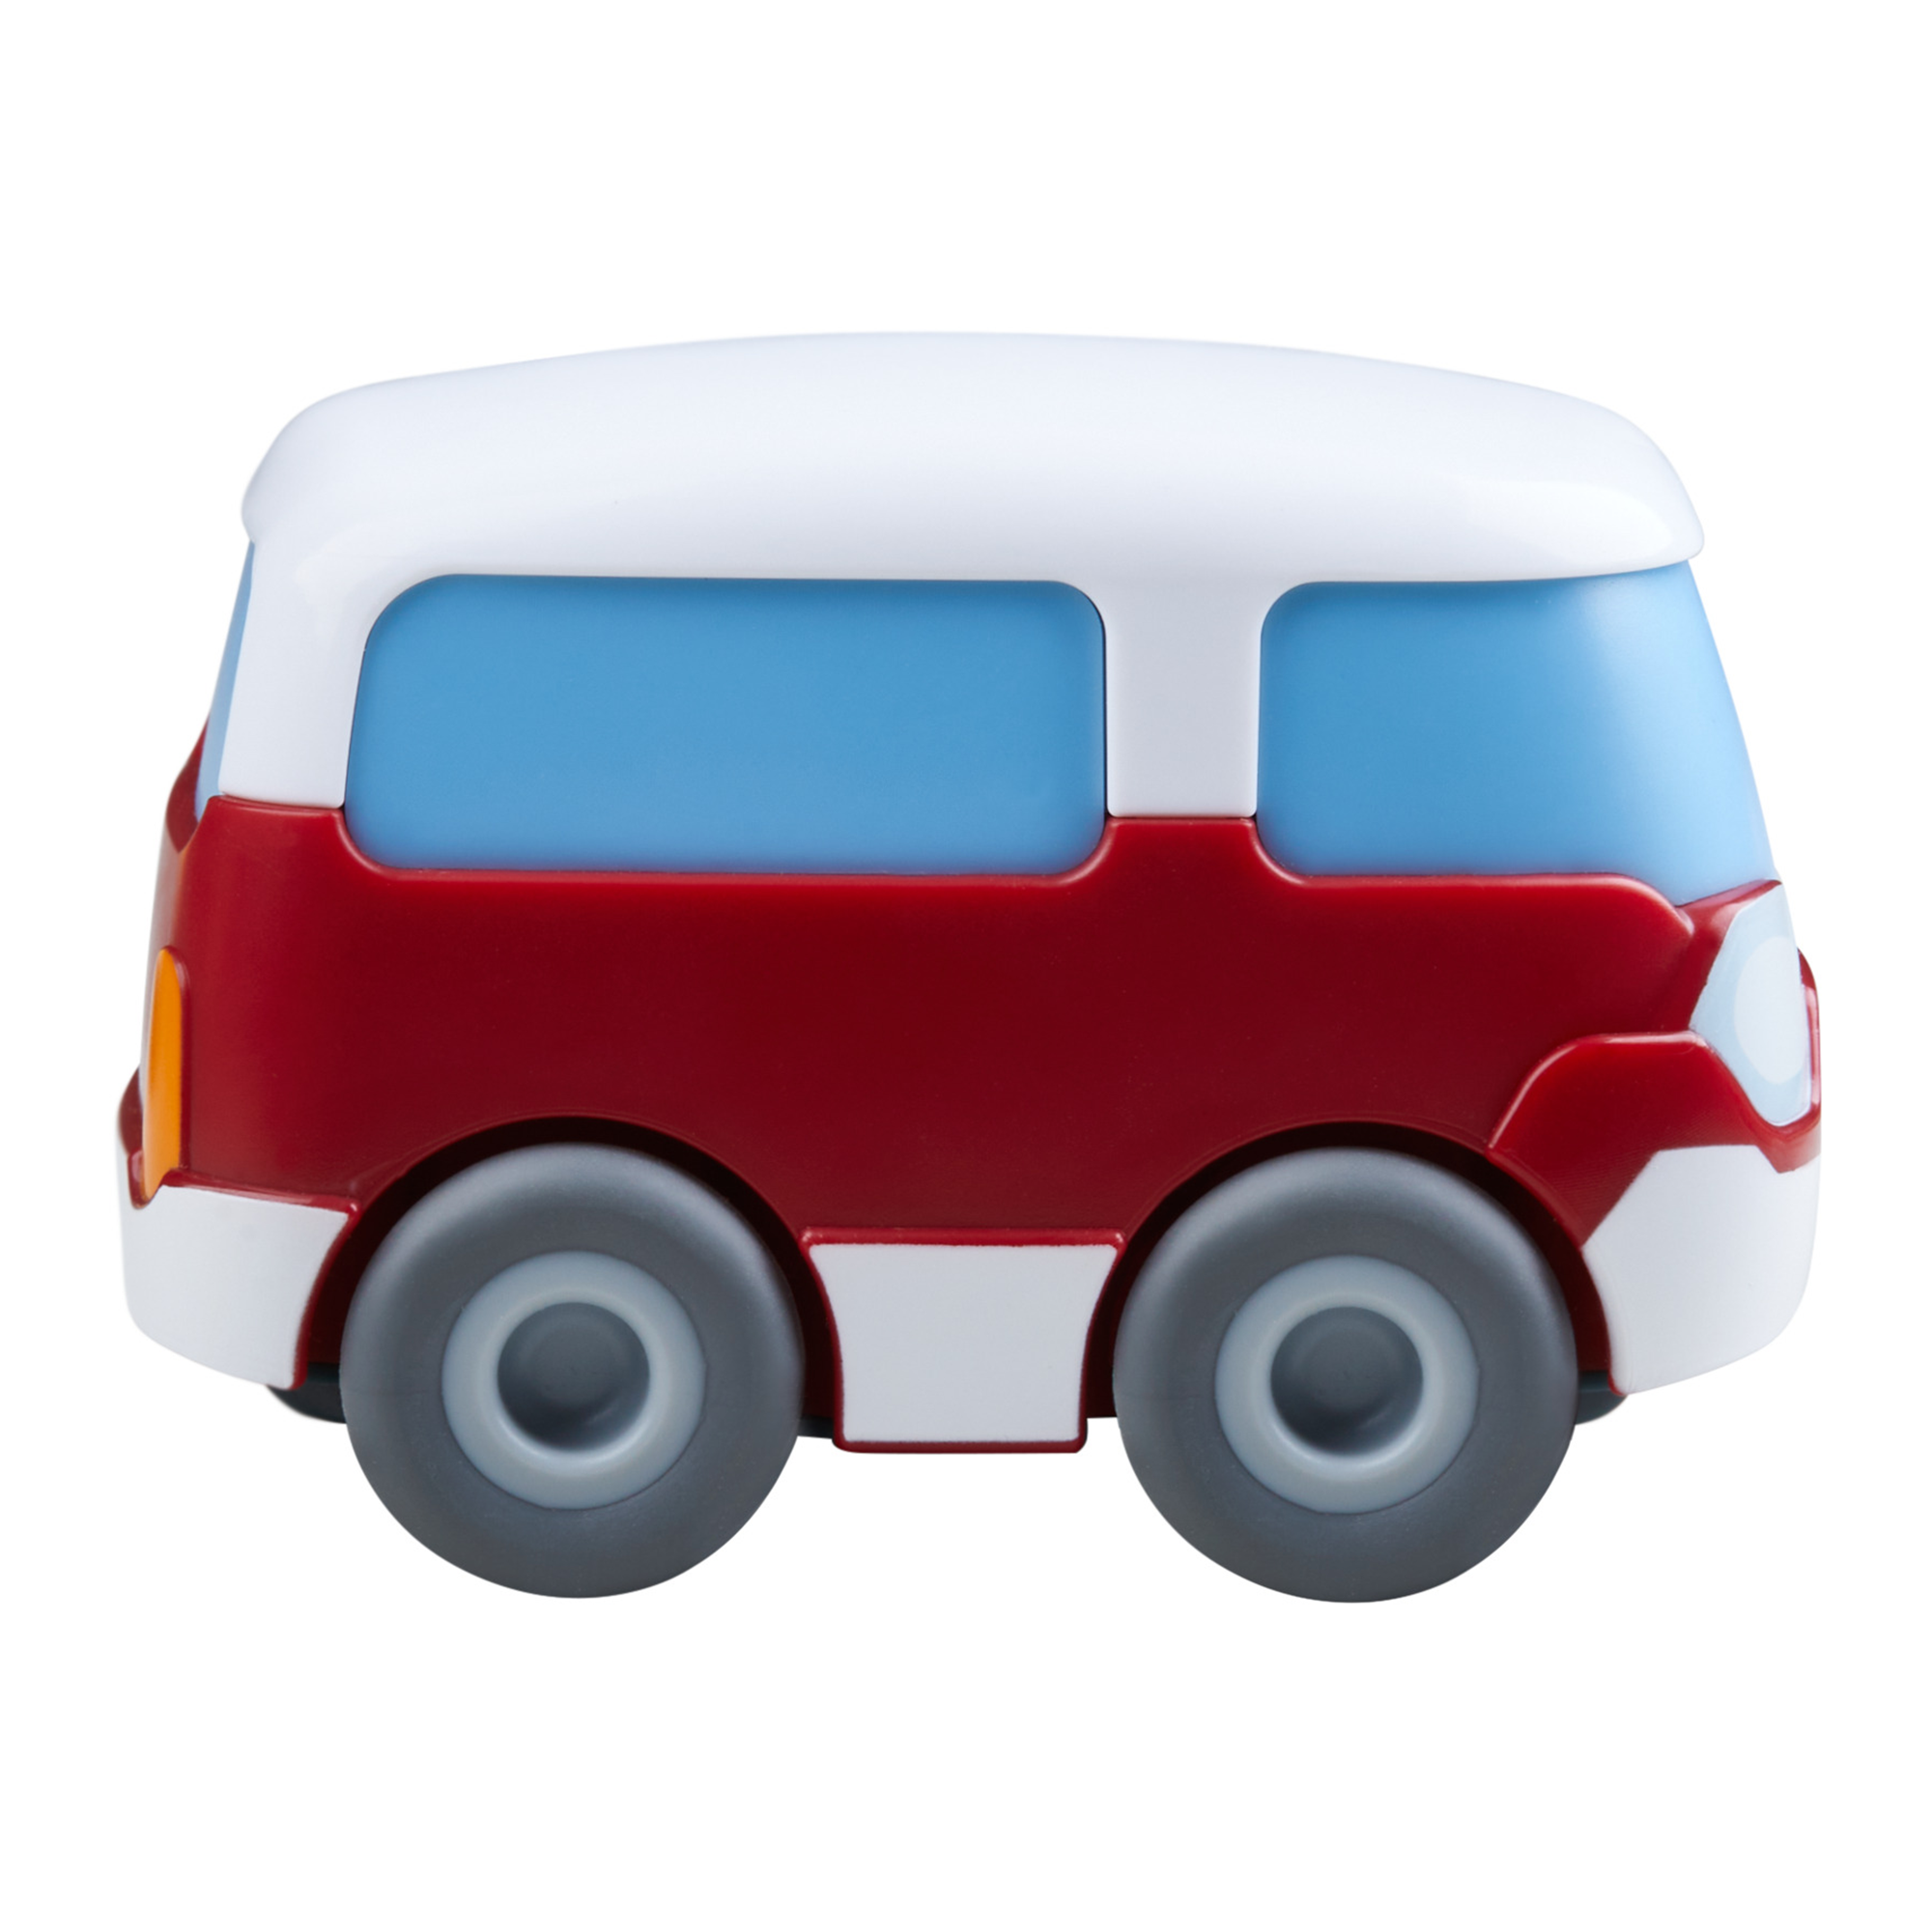 Hape Auto mit Sirene - Spielzeugauto für Kinder ab 12 Monaten